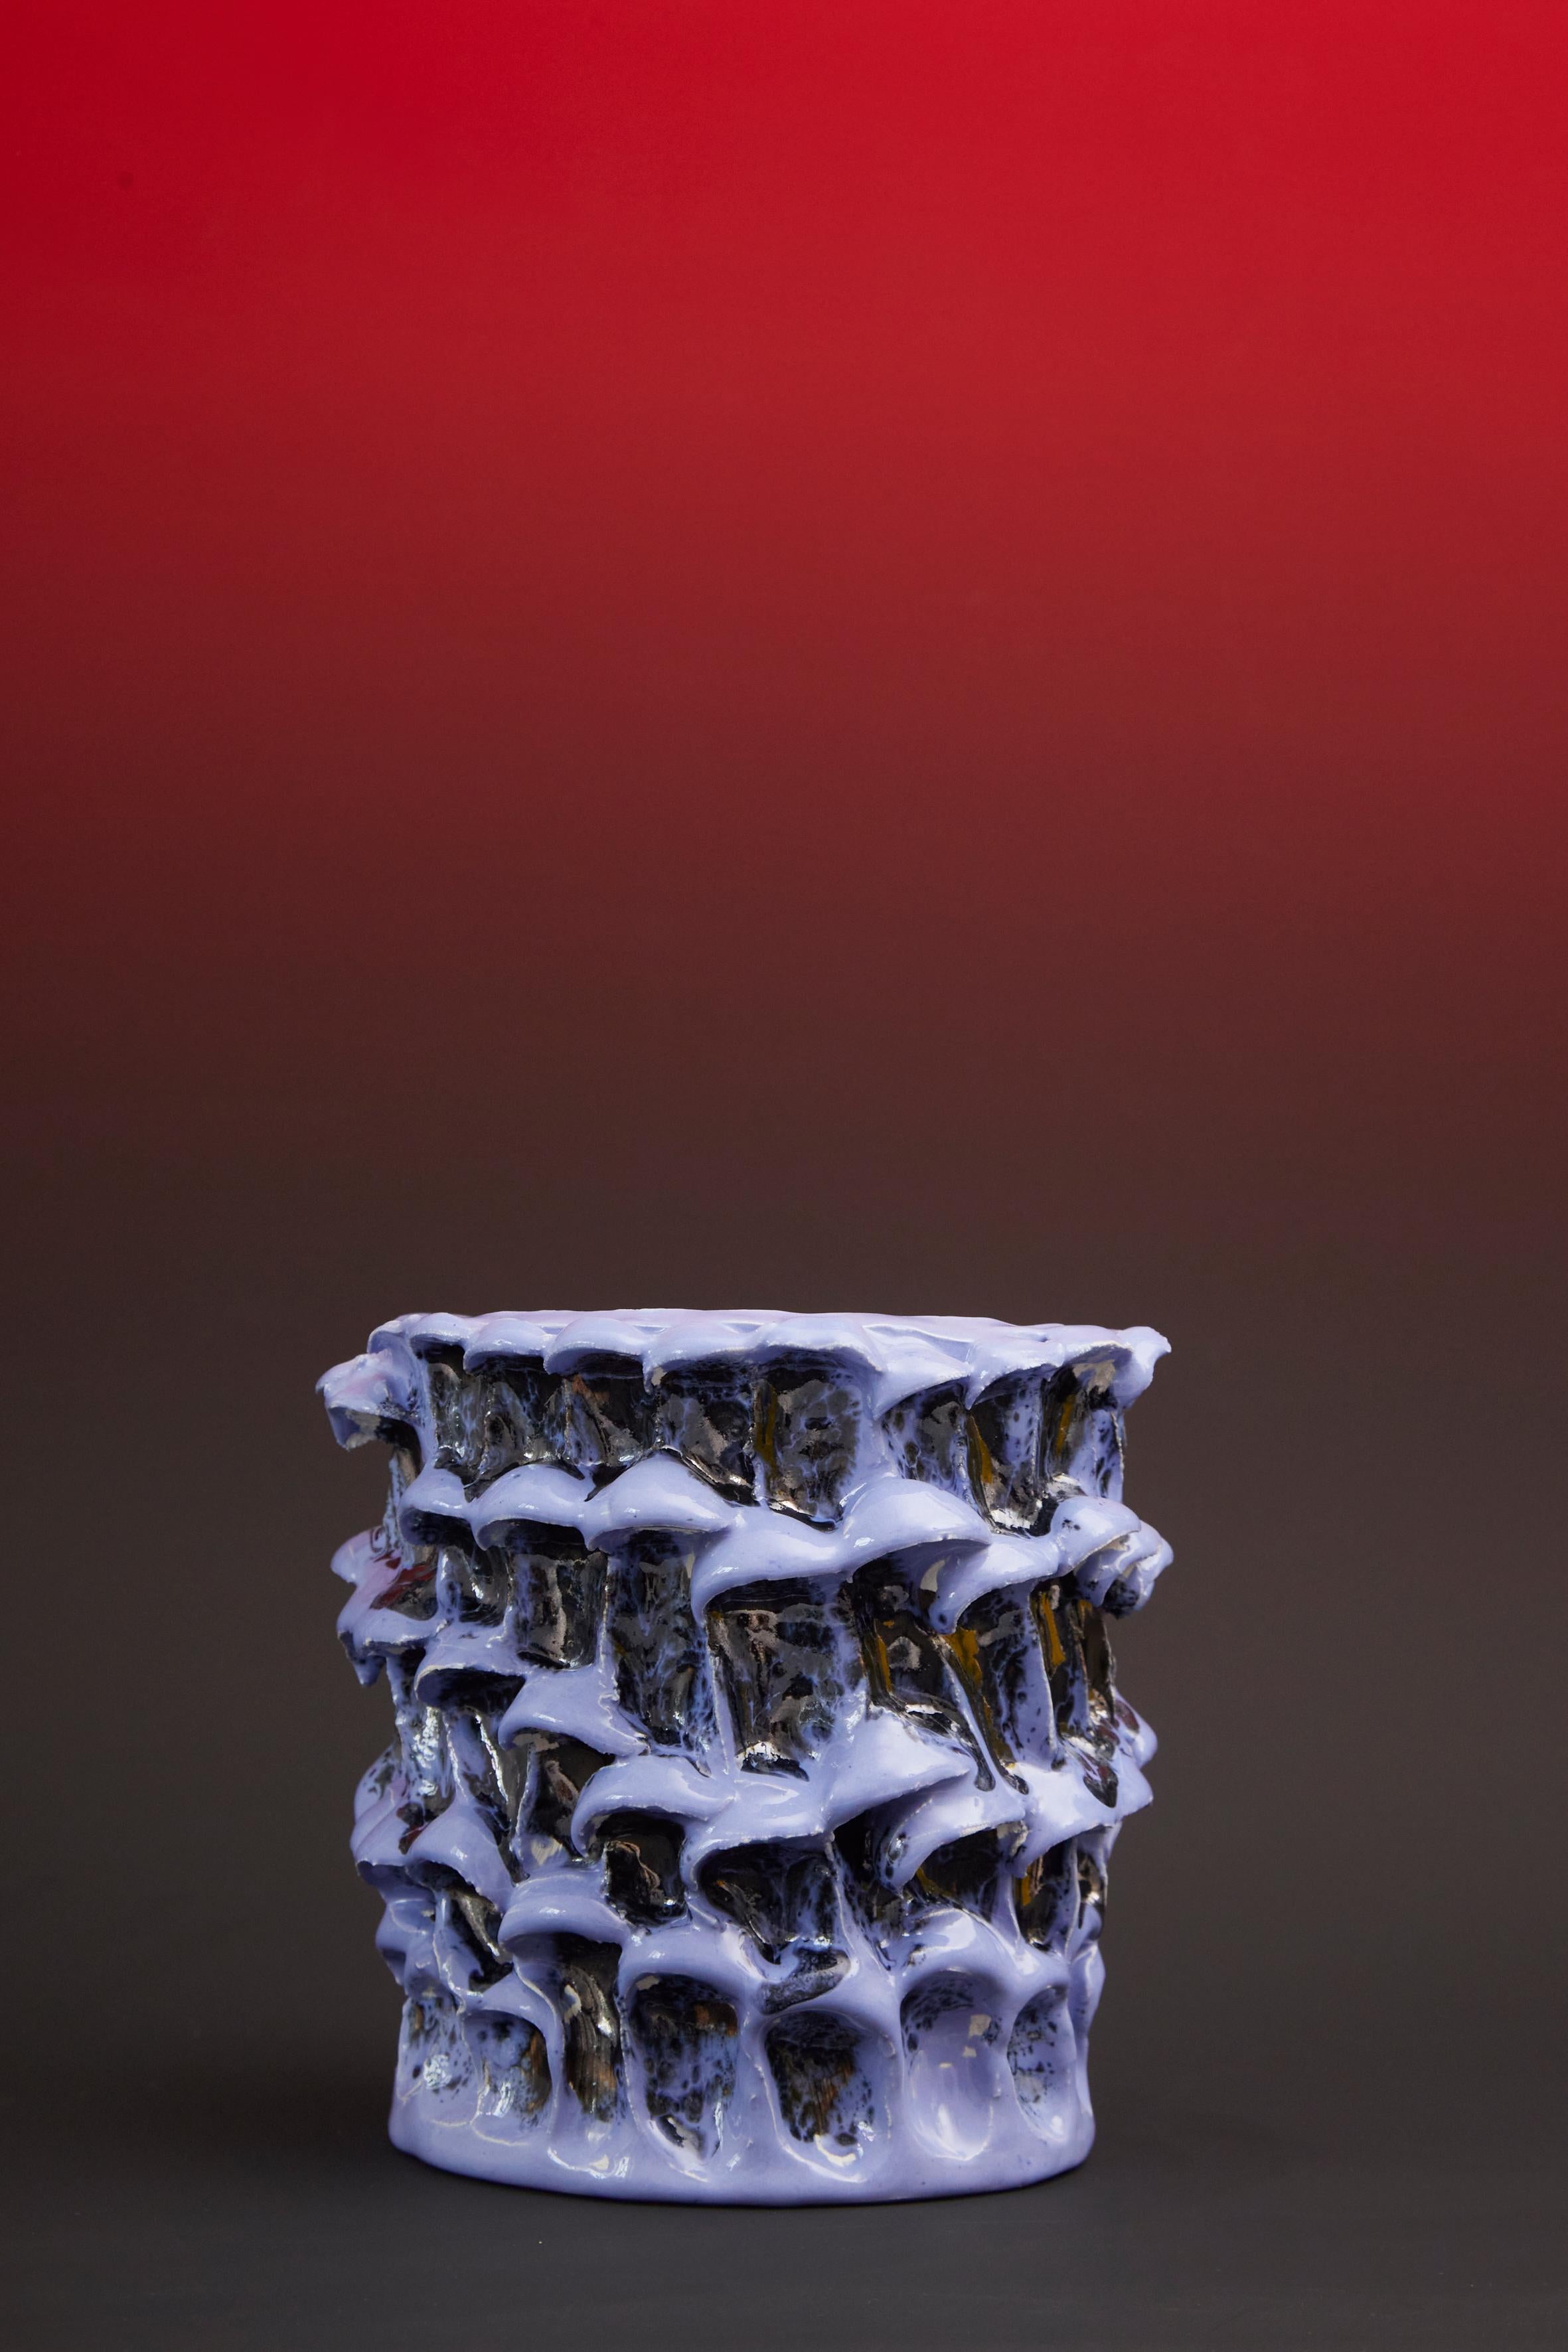 Onda vase, small, in metallic lavender n. 01 / 20 numbered serie
Unique Handmade piece
Glazed earthenware by Daria Dazzan
Earthenware, glazes
Measures : 17 X 18 cm ab.

Handmade earthenware vase by Daria Dazzan, unique piece, numbered.
Daria